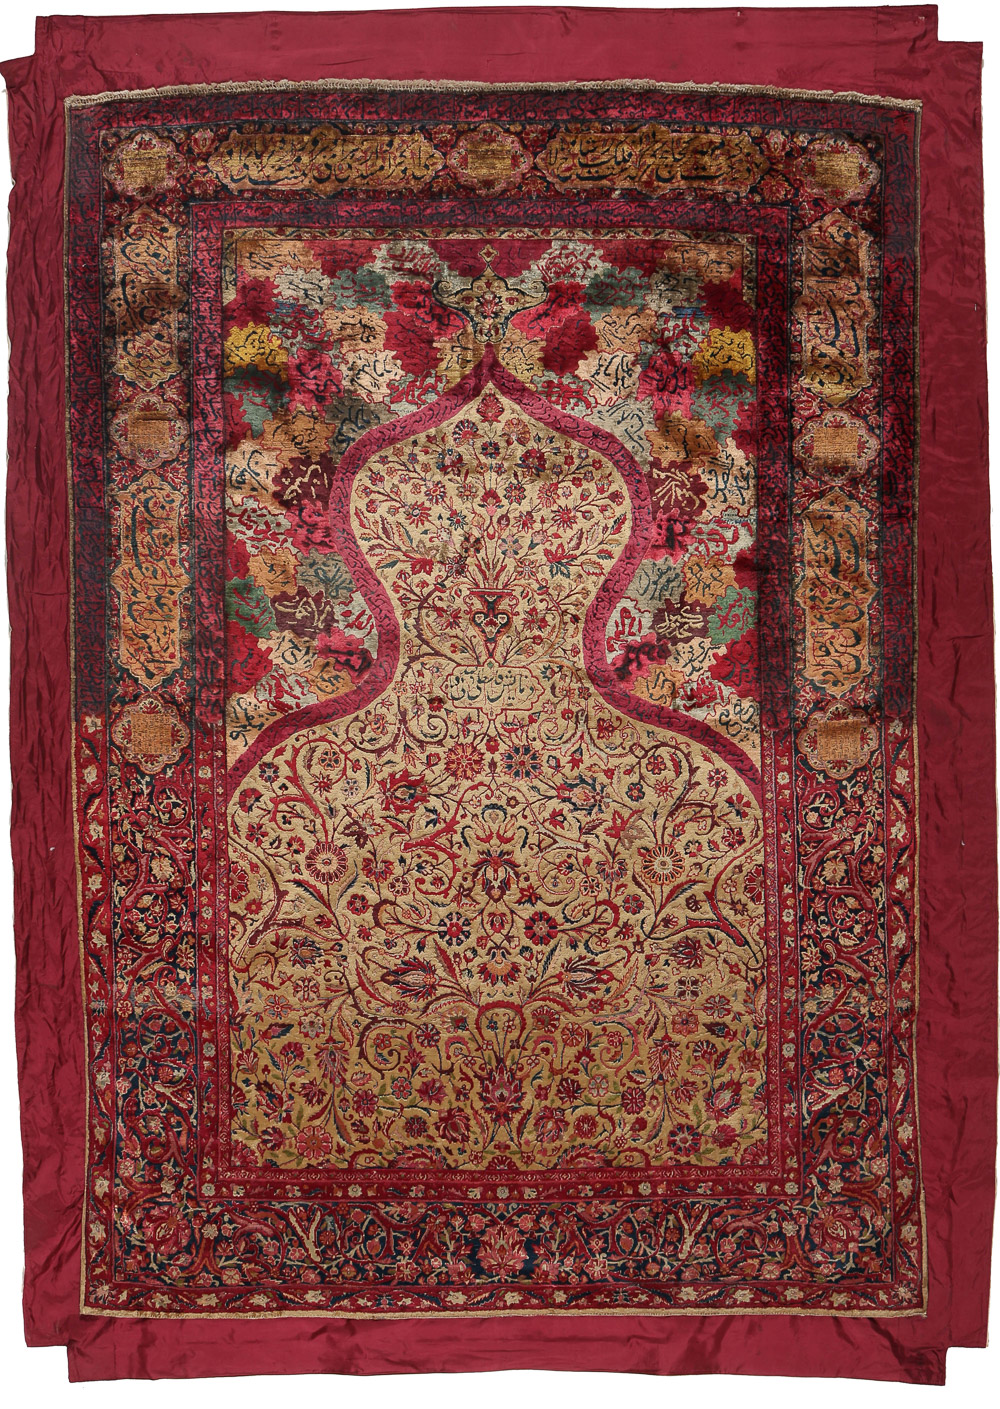 Kashan silk rug signed 'by order Kastelli and Sadaghiani', 194 x 135 cm